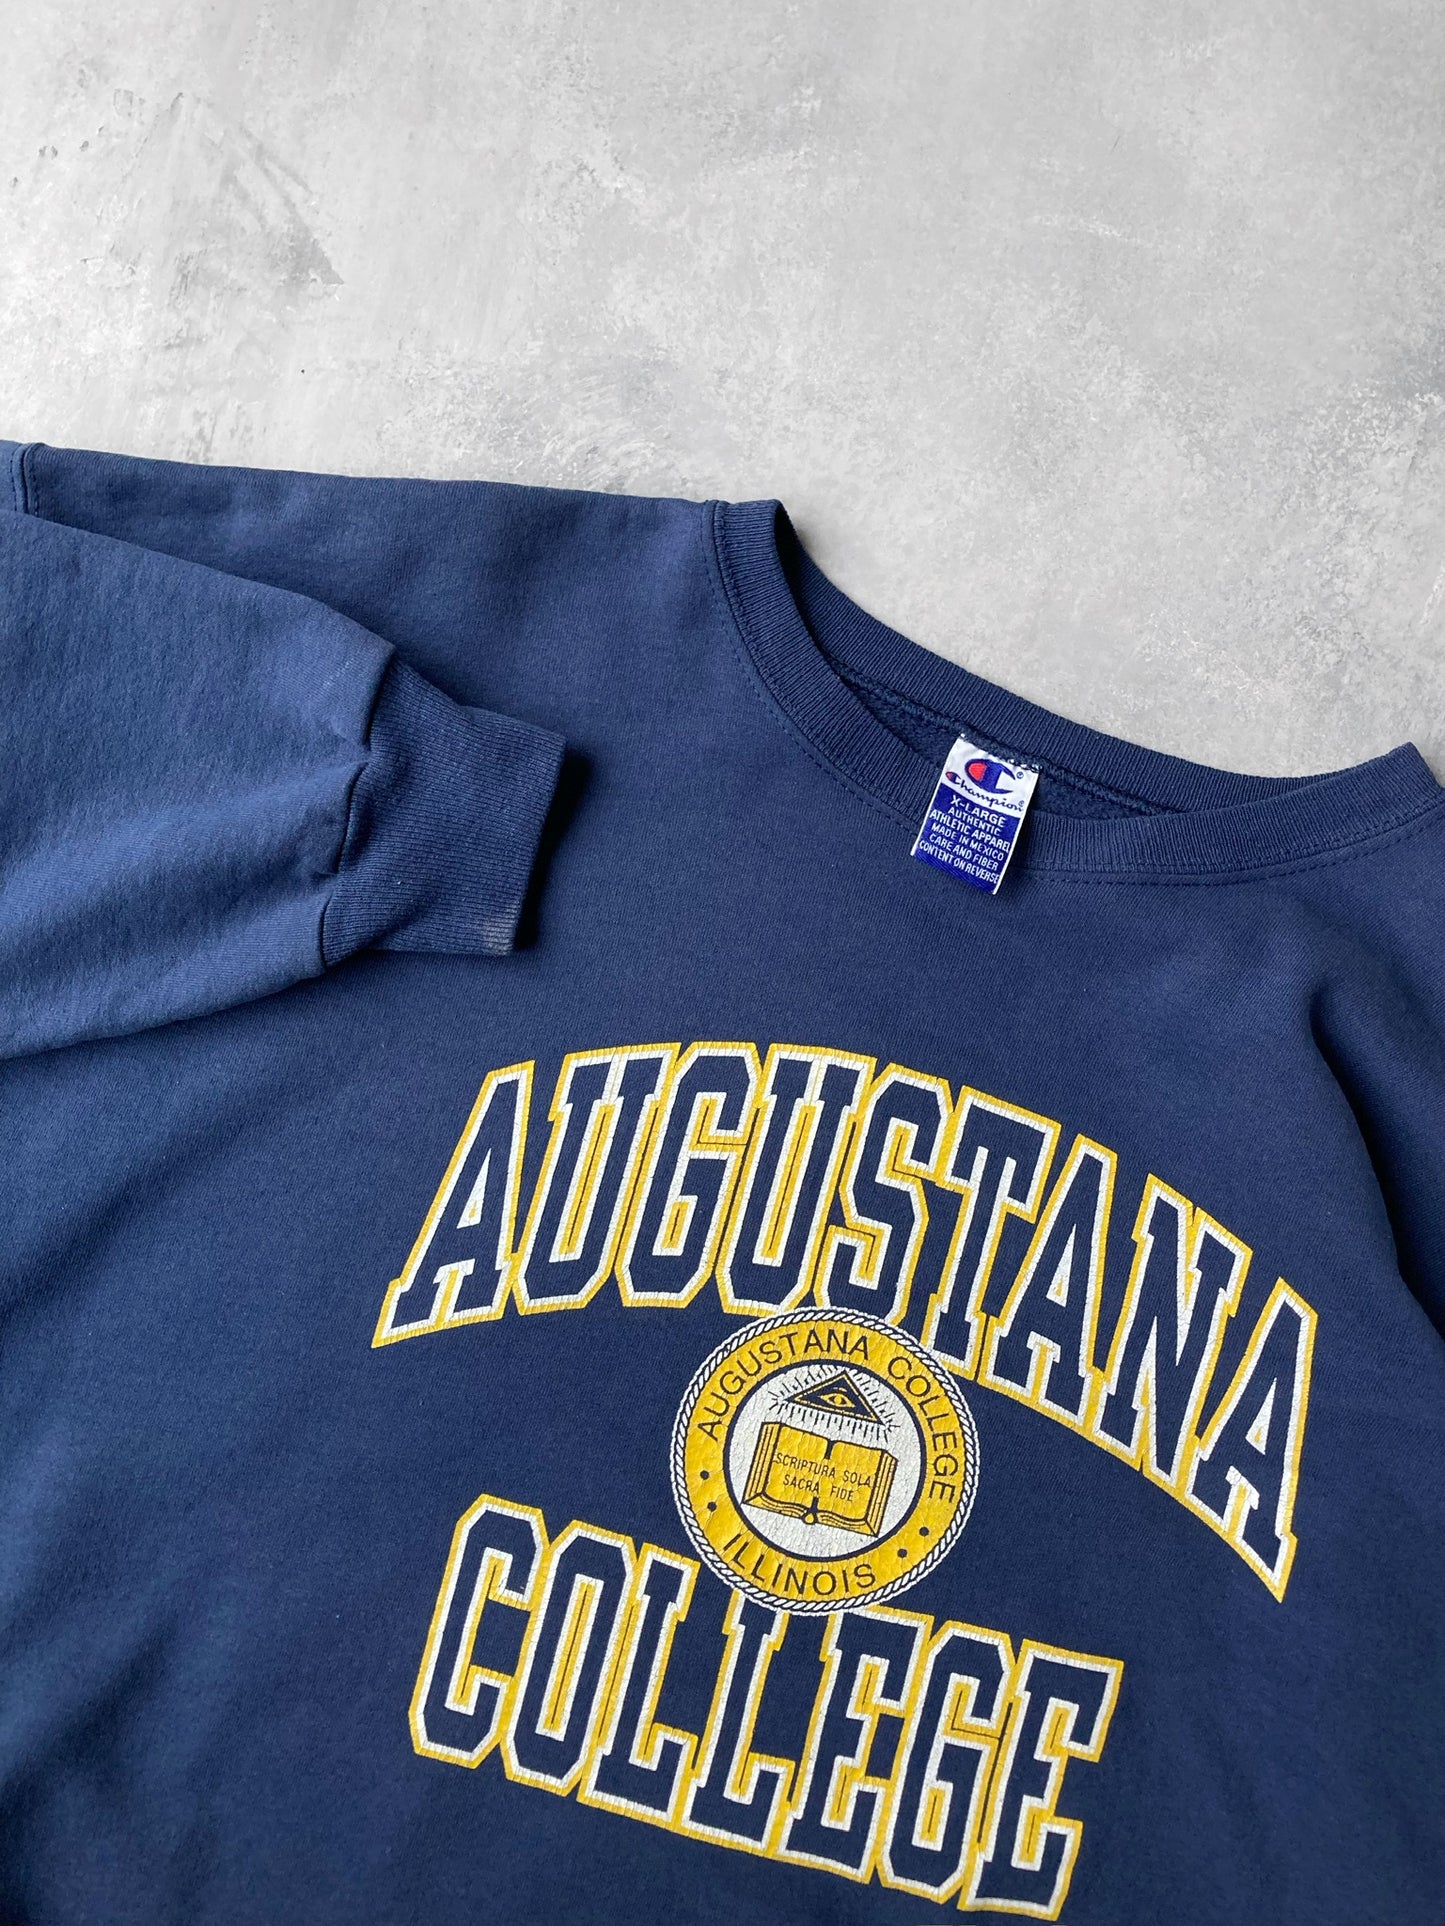 Augustana College Crewneck 90's - XL